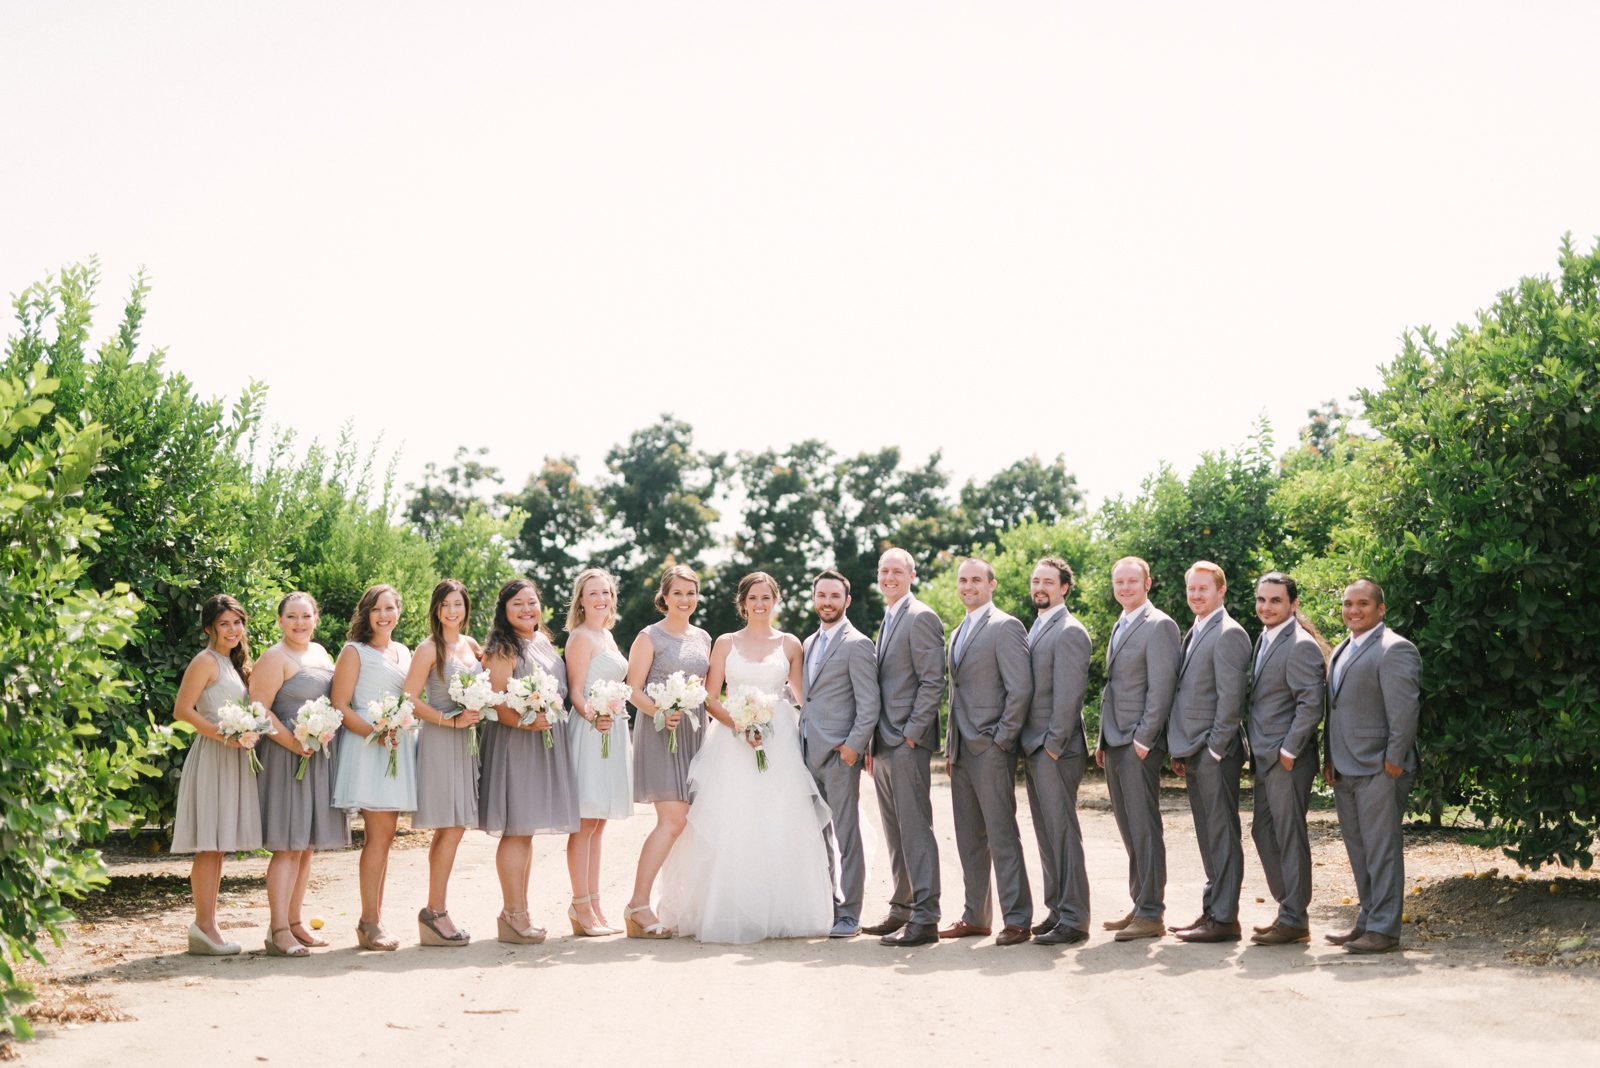 All wedding party at Limoneira Ranch Wedding by San Luis Obispo Wedding Photographer Yvonne Goll Photography